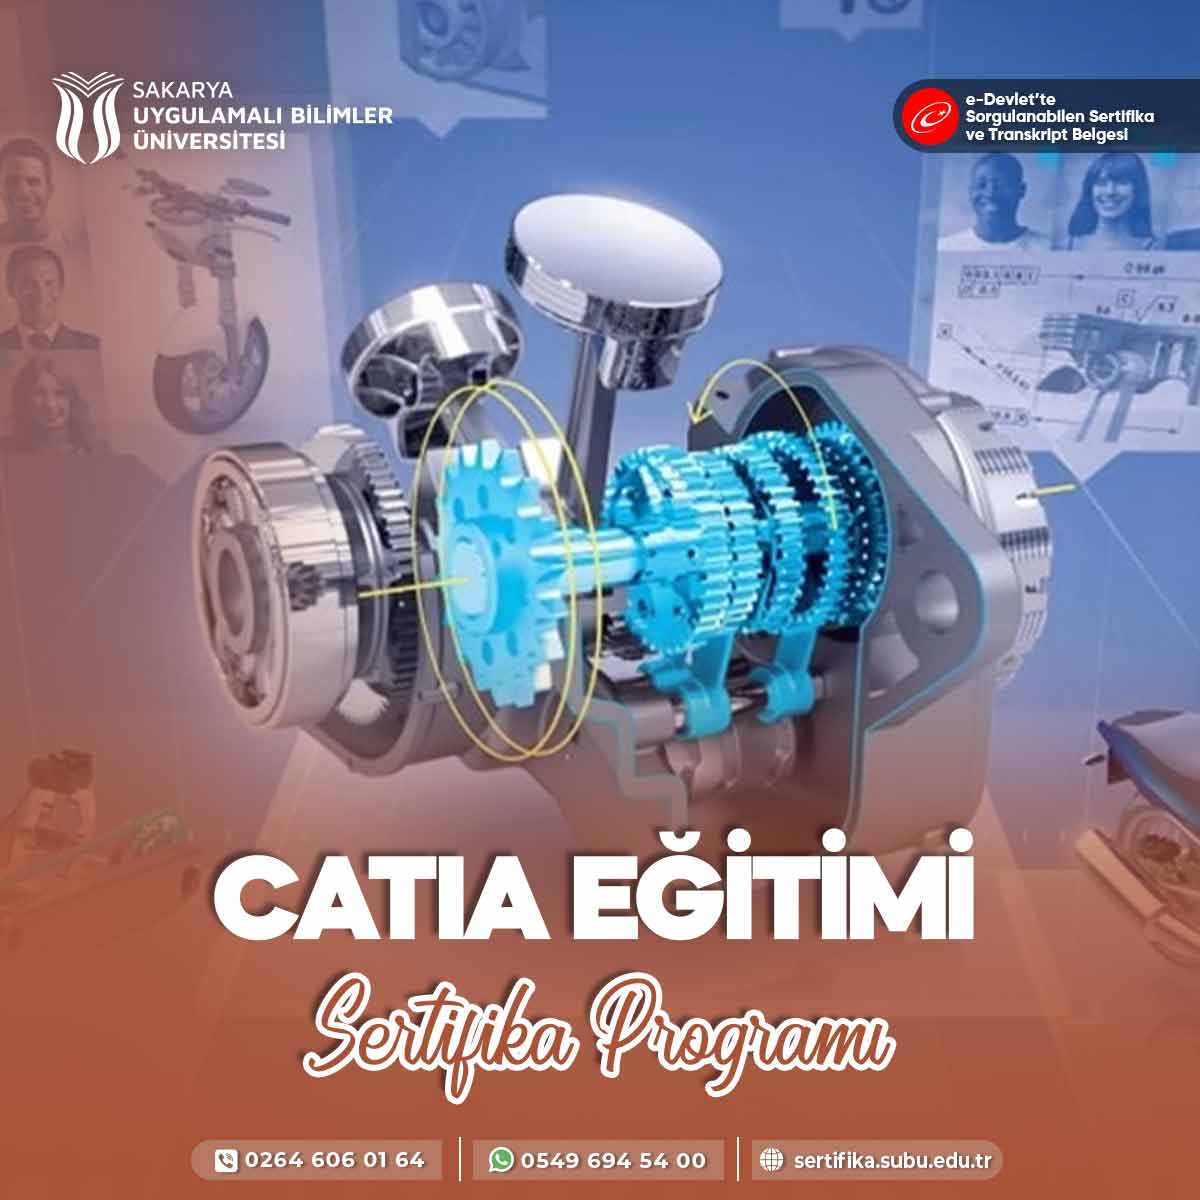 Catia Eğitimi Sertifika Programı